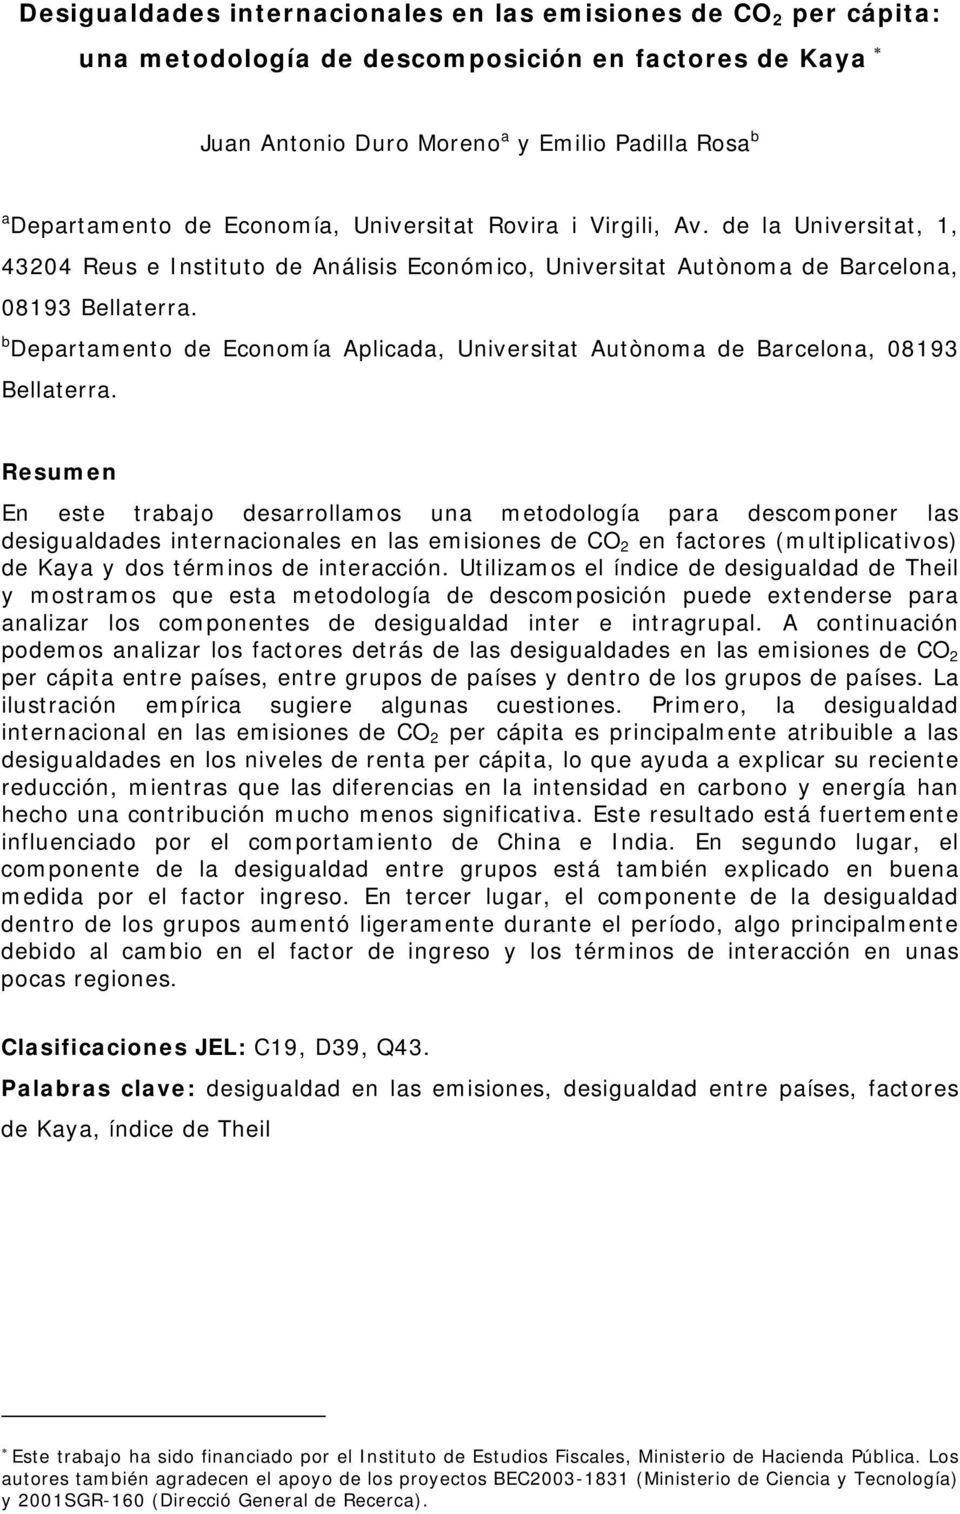 b Departamento de Economía Aplicada, Universitat Autònoma de Barcelona, 08193 Bellaterra.